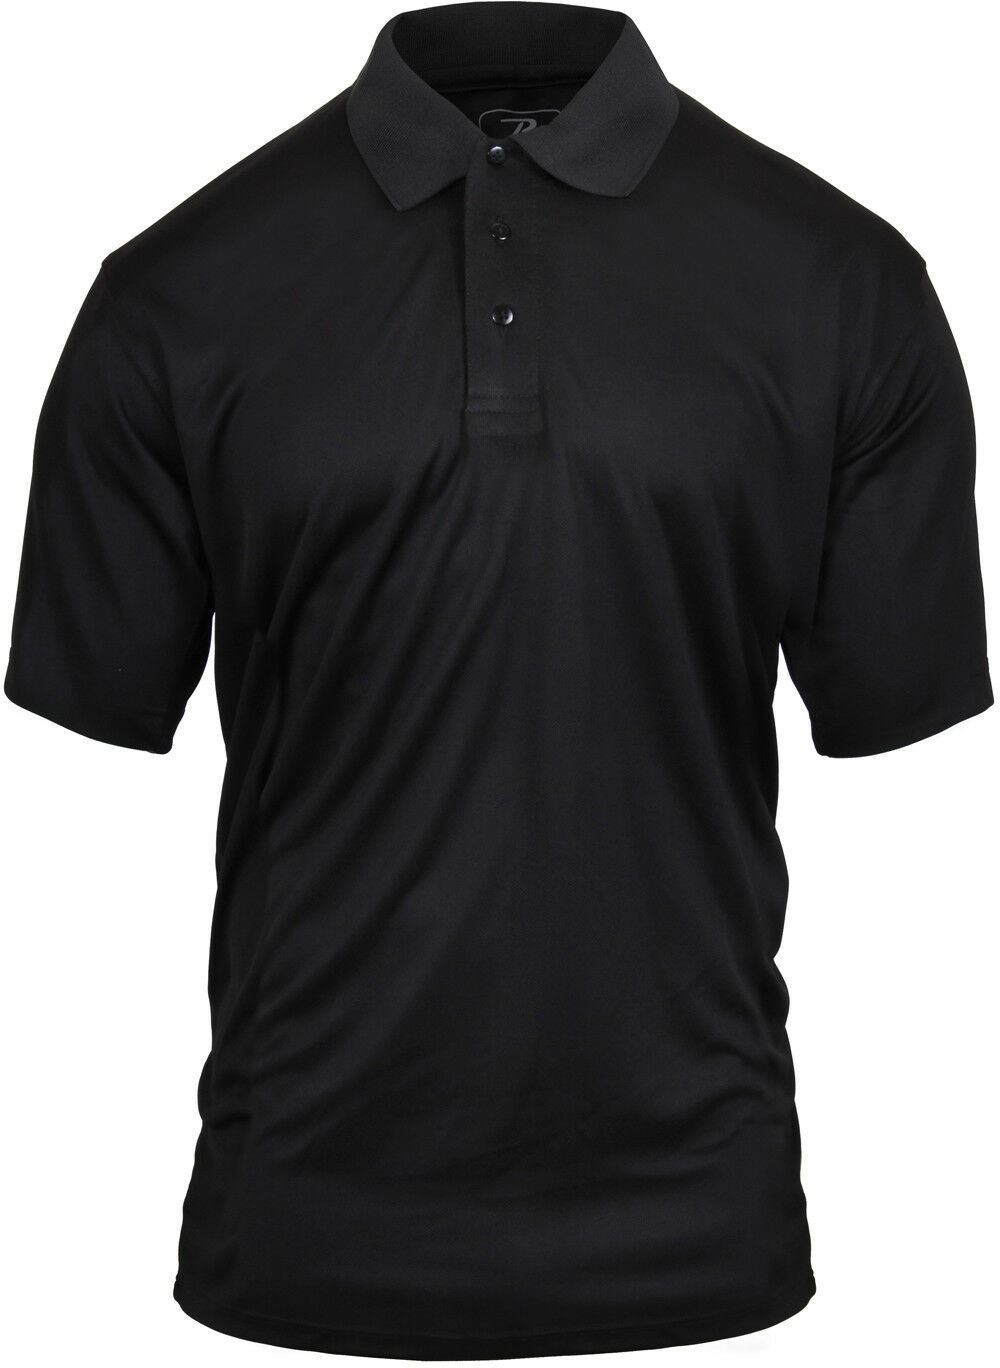 Black Tactical Polo Shirt Moisture Wicking Quick Dry Golf Uniform Top ...